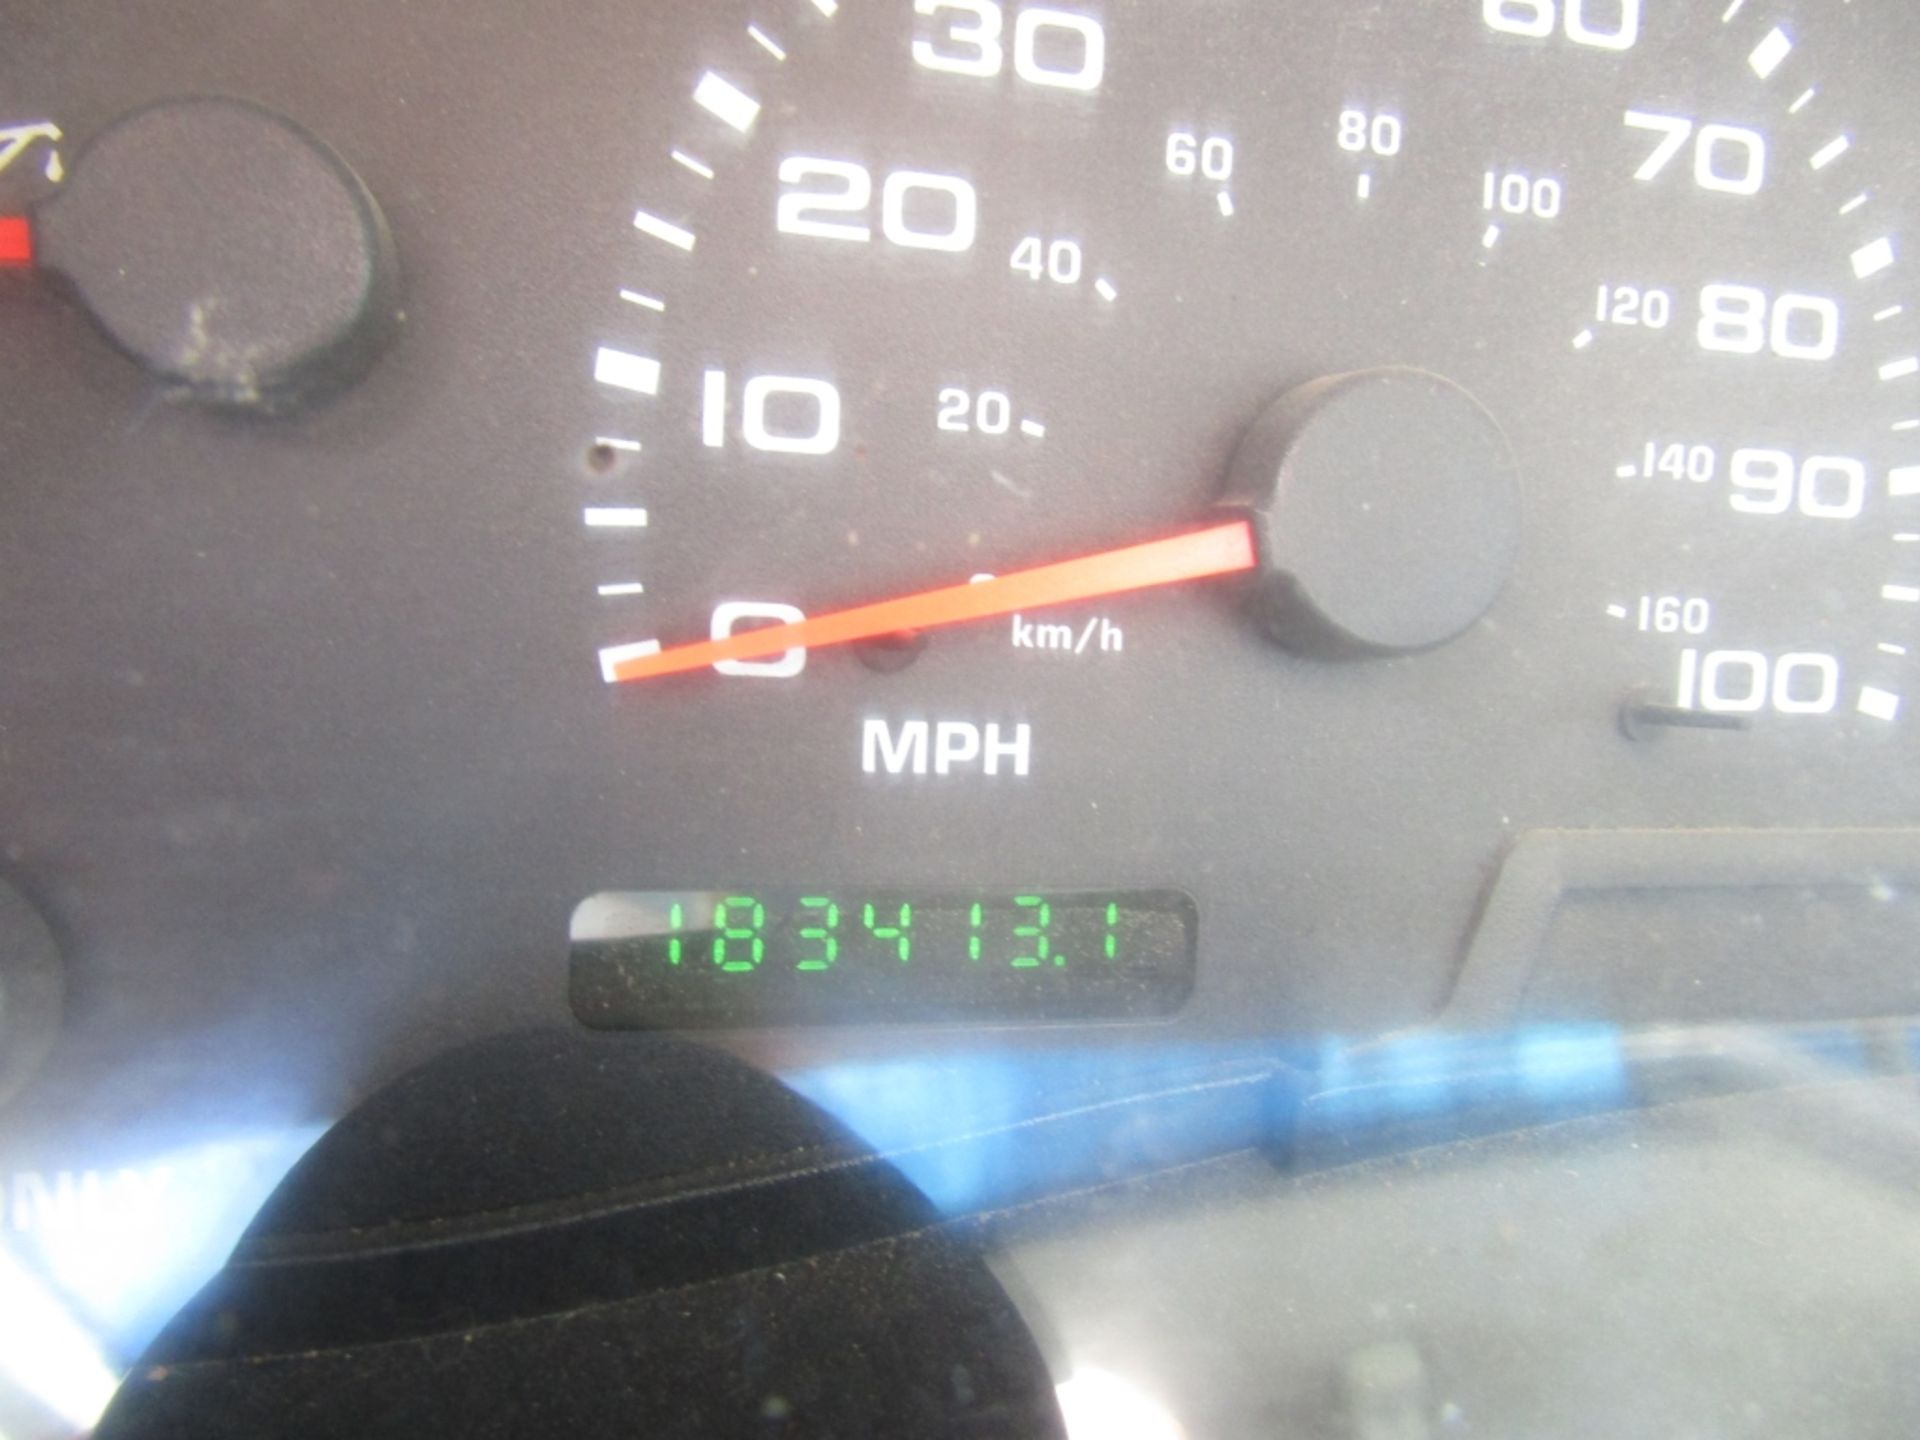 2003 Ford F550 XL Super Duty, 4x4, Flat Bed Pickup Truck VIN# 1FDAF57P93ED89548, 183,413 miles - Image 10 of 27